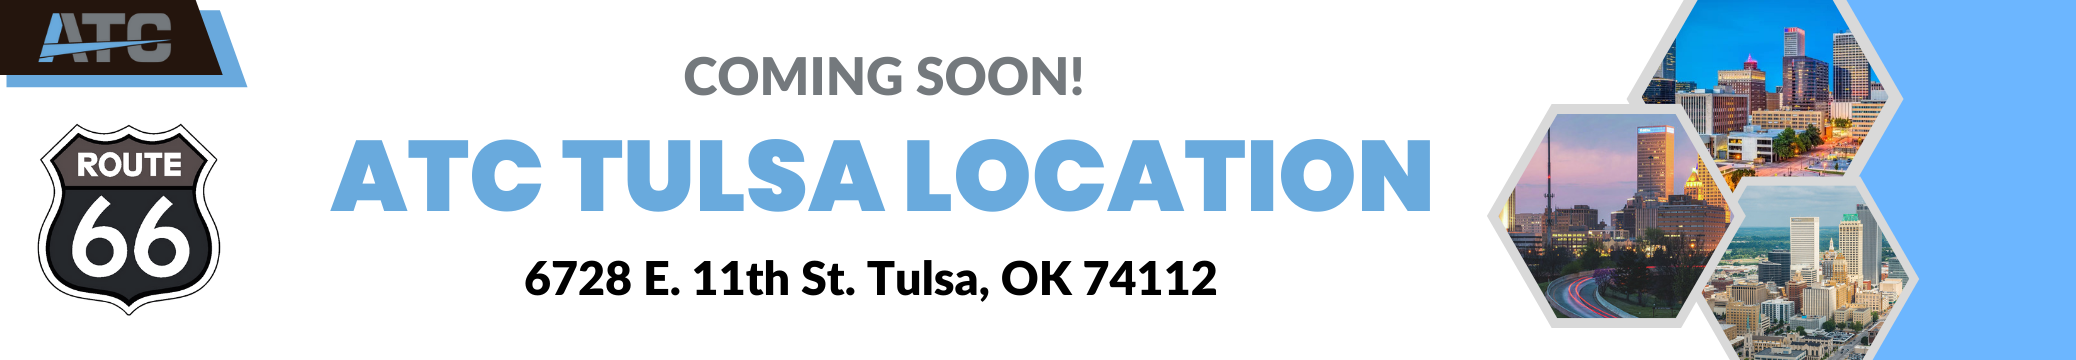 ATC Tulsa Location Announcement